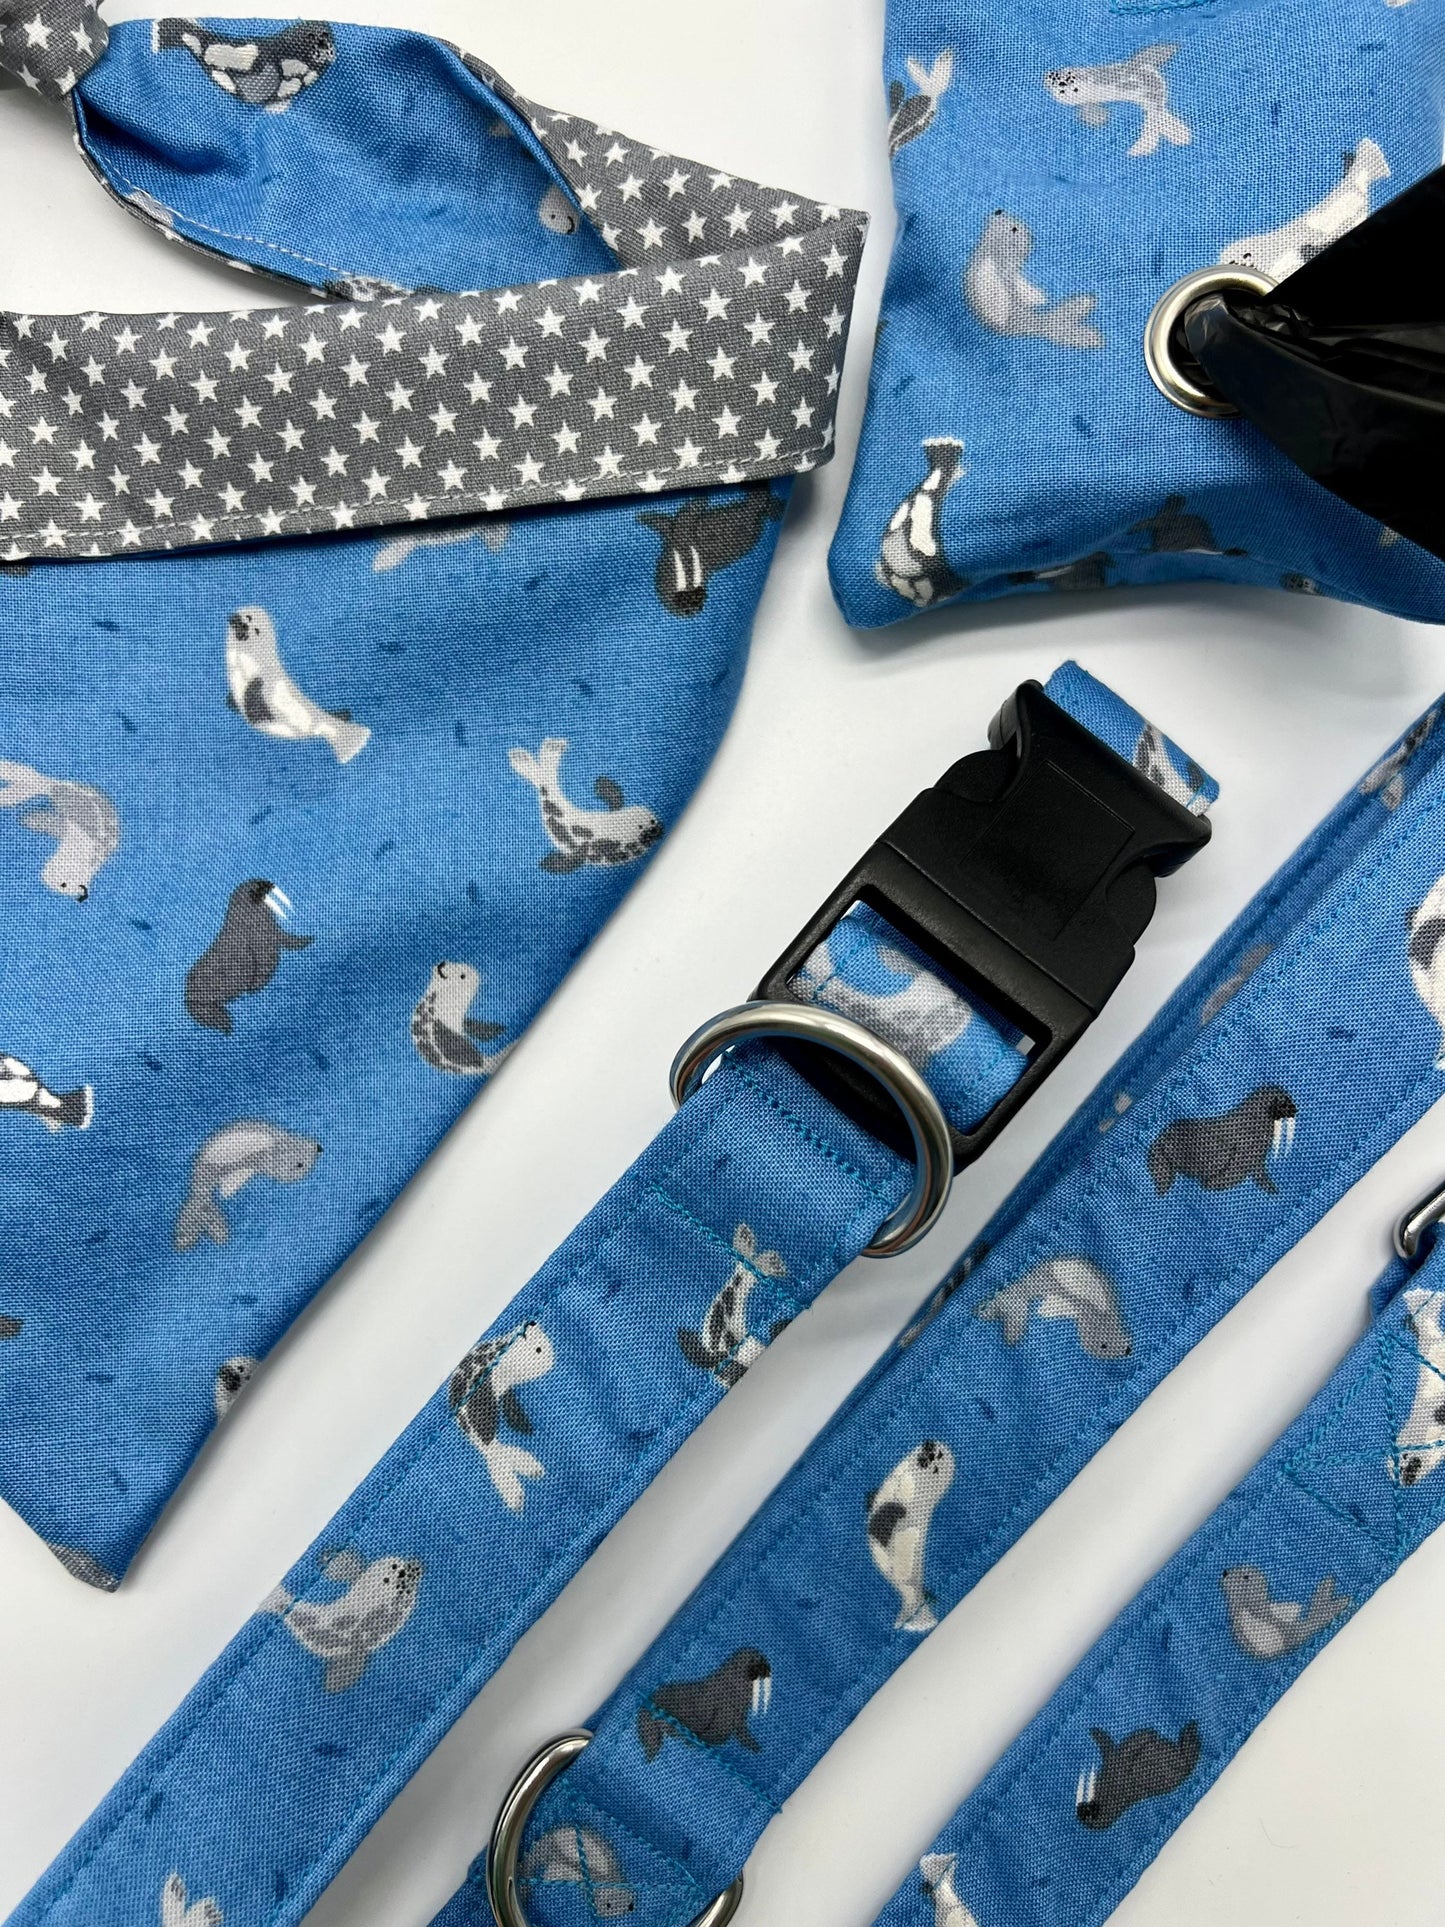 St Ives Seal print adjustable dog collar